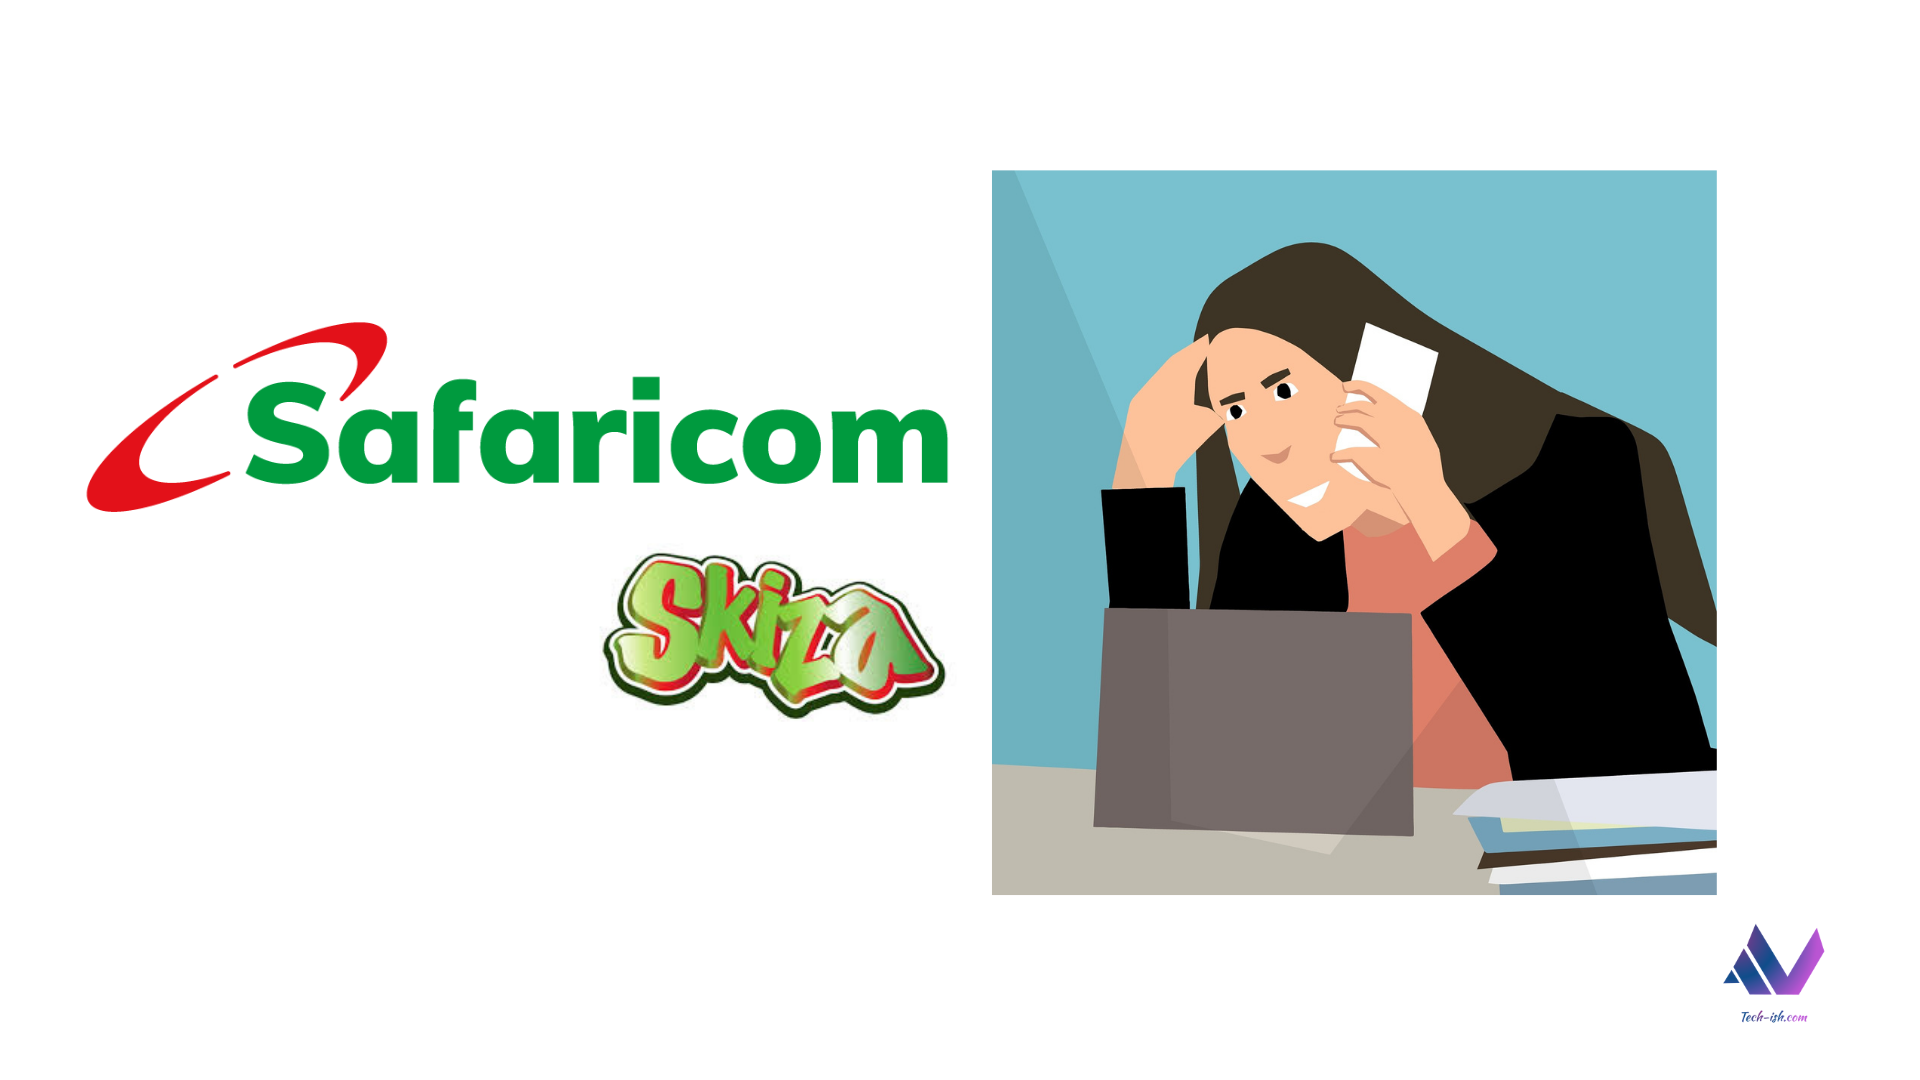 Safaricom is bringing Adverts to Skiza Tunes